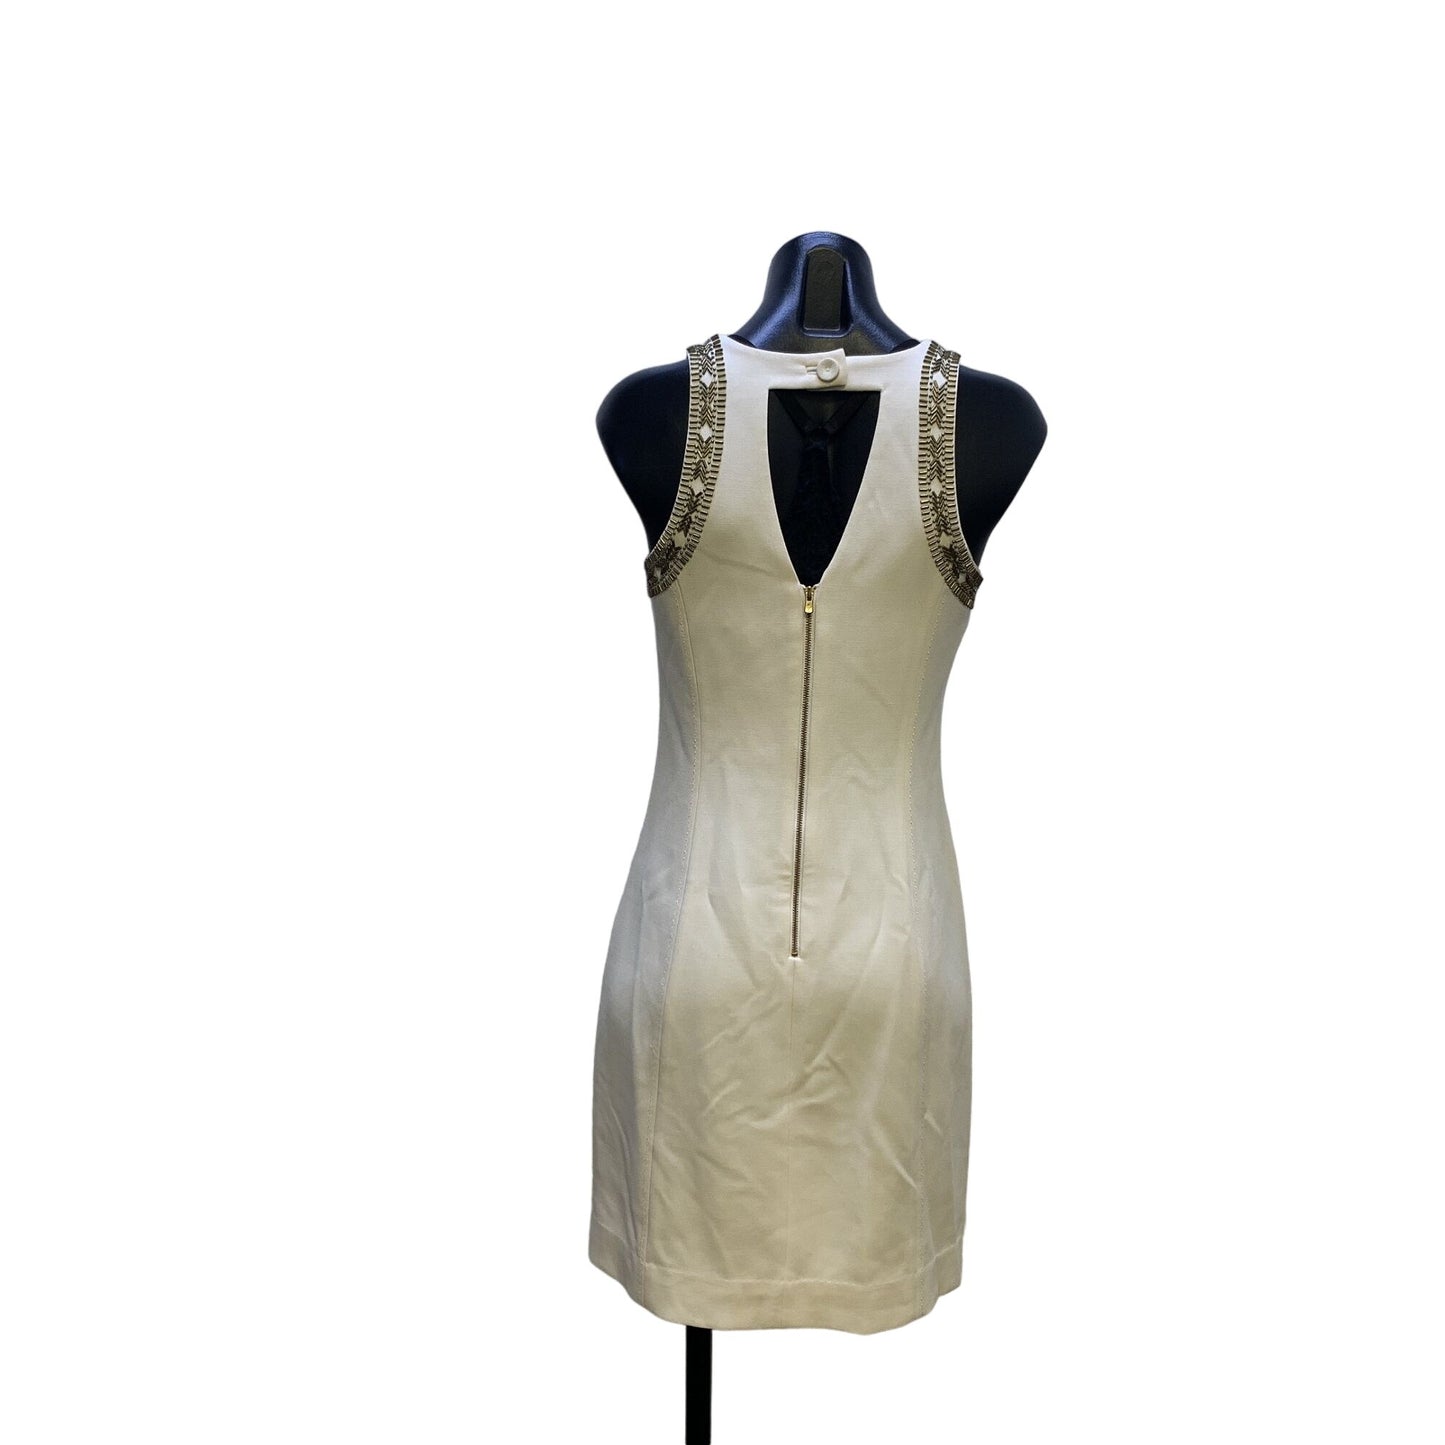 Lily Pulitzer Beaded Ivory Sleeveless Dress Size 4